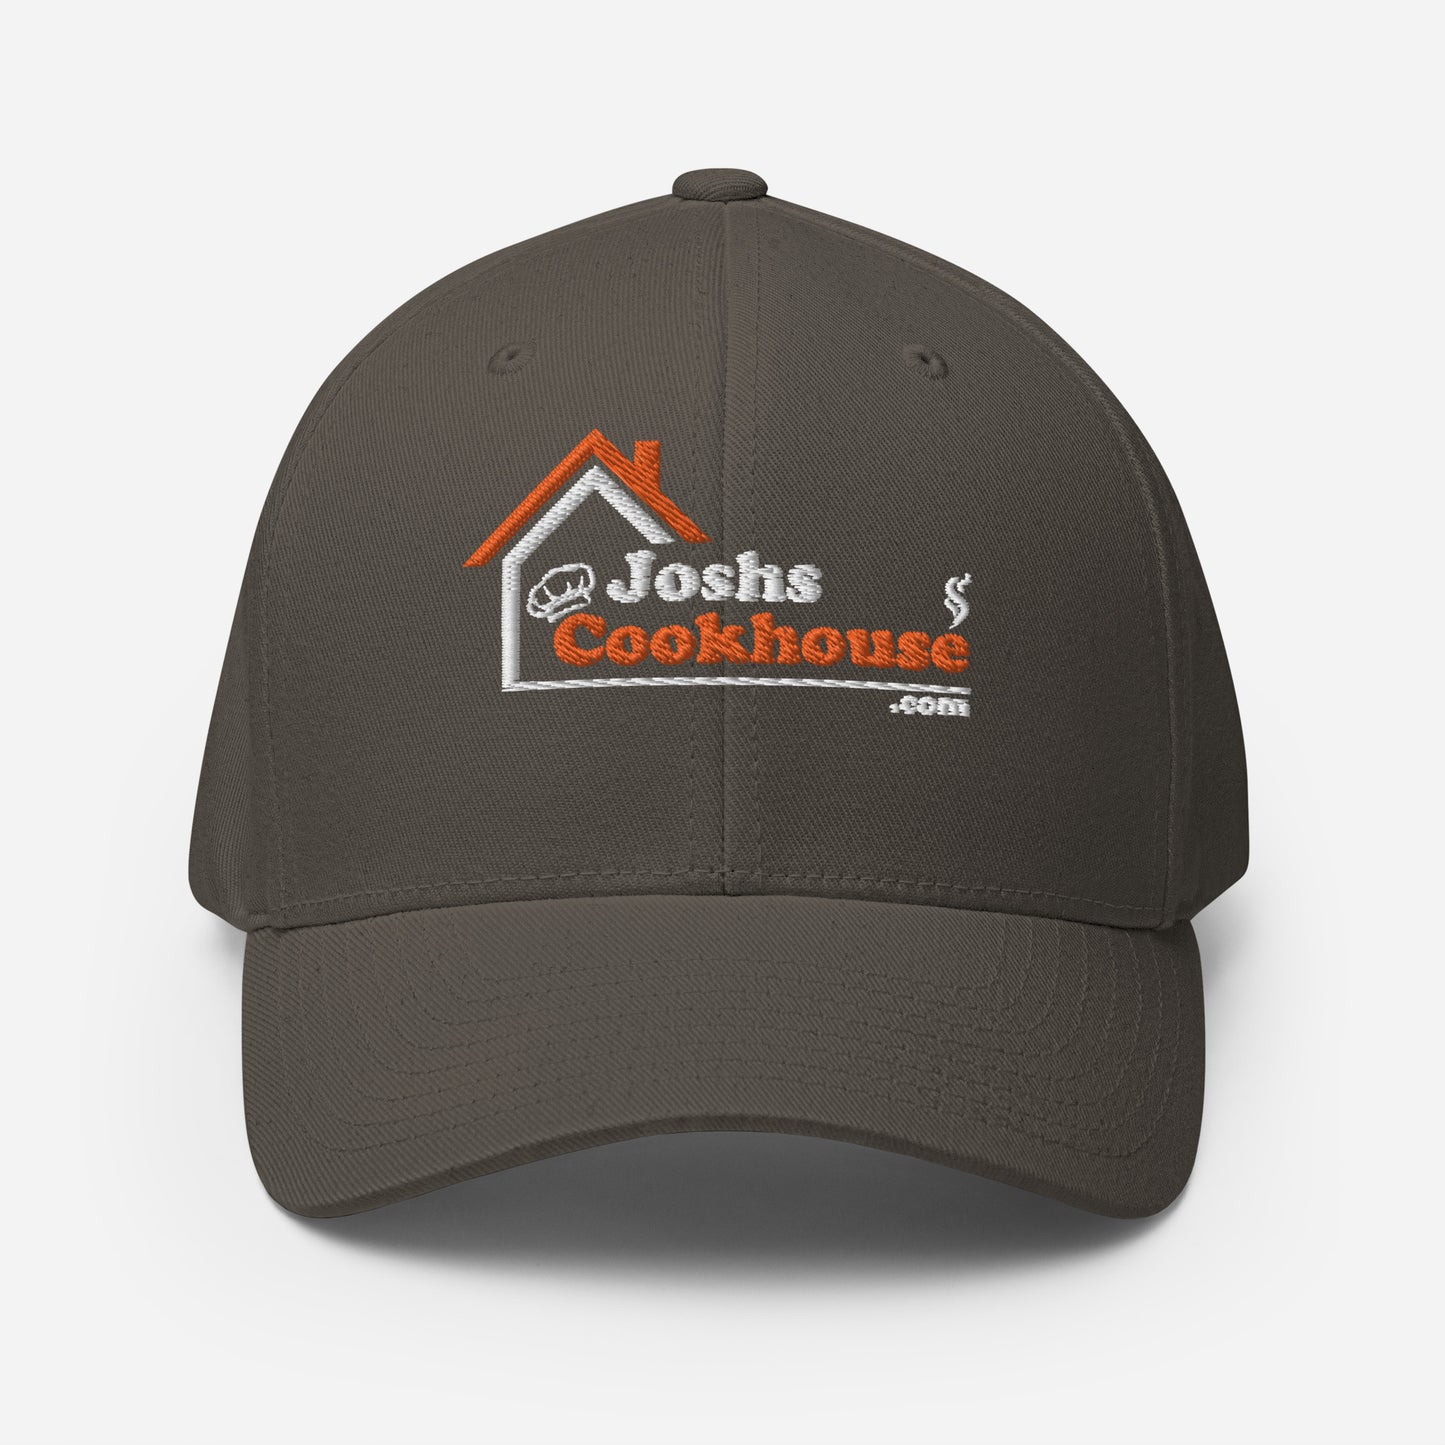 Joshs Cookhouse Baseball Cap